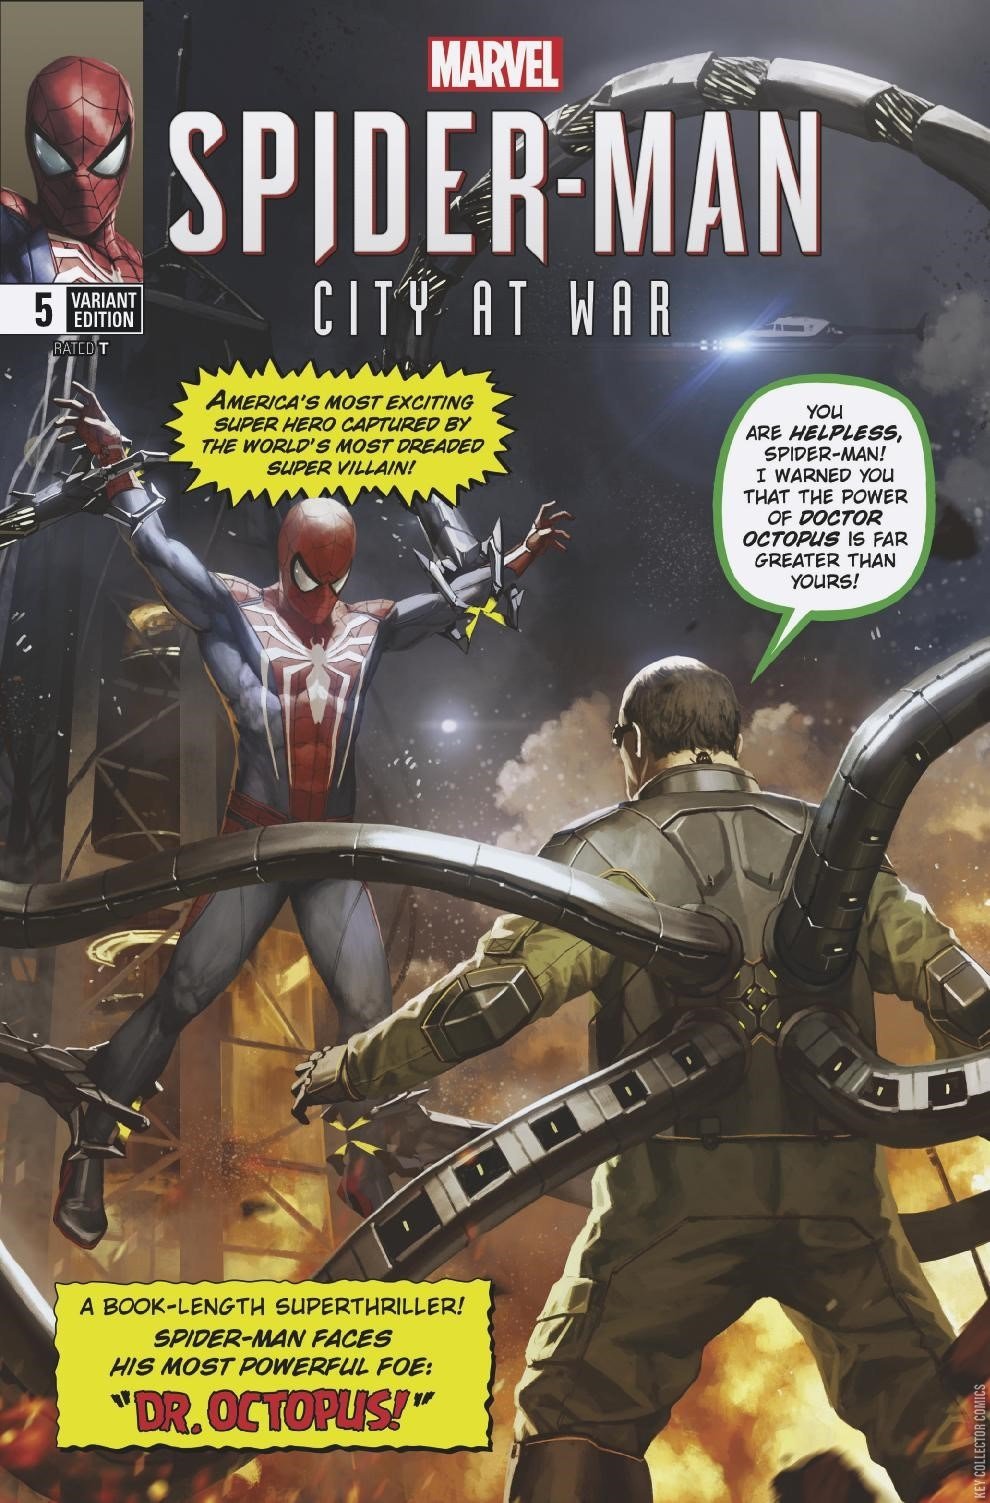 Key Collector Comics - Marvel's Spider-Man: City At War #5